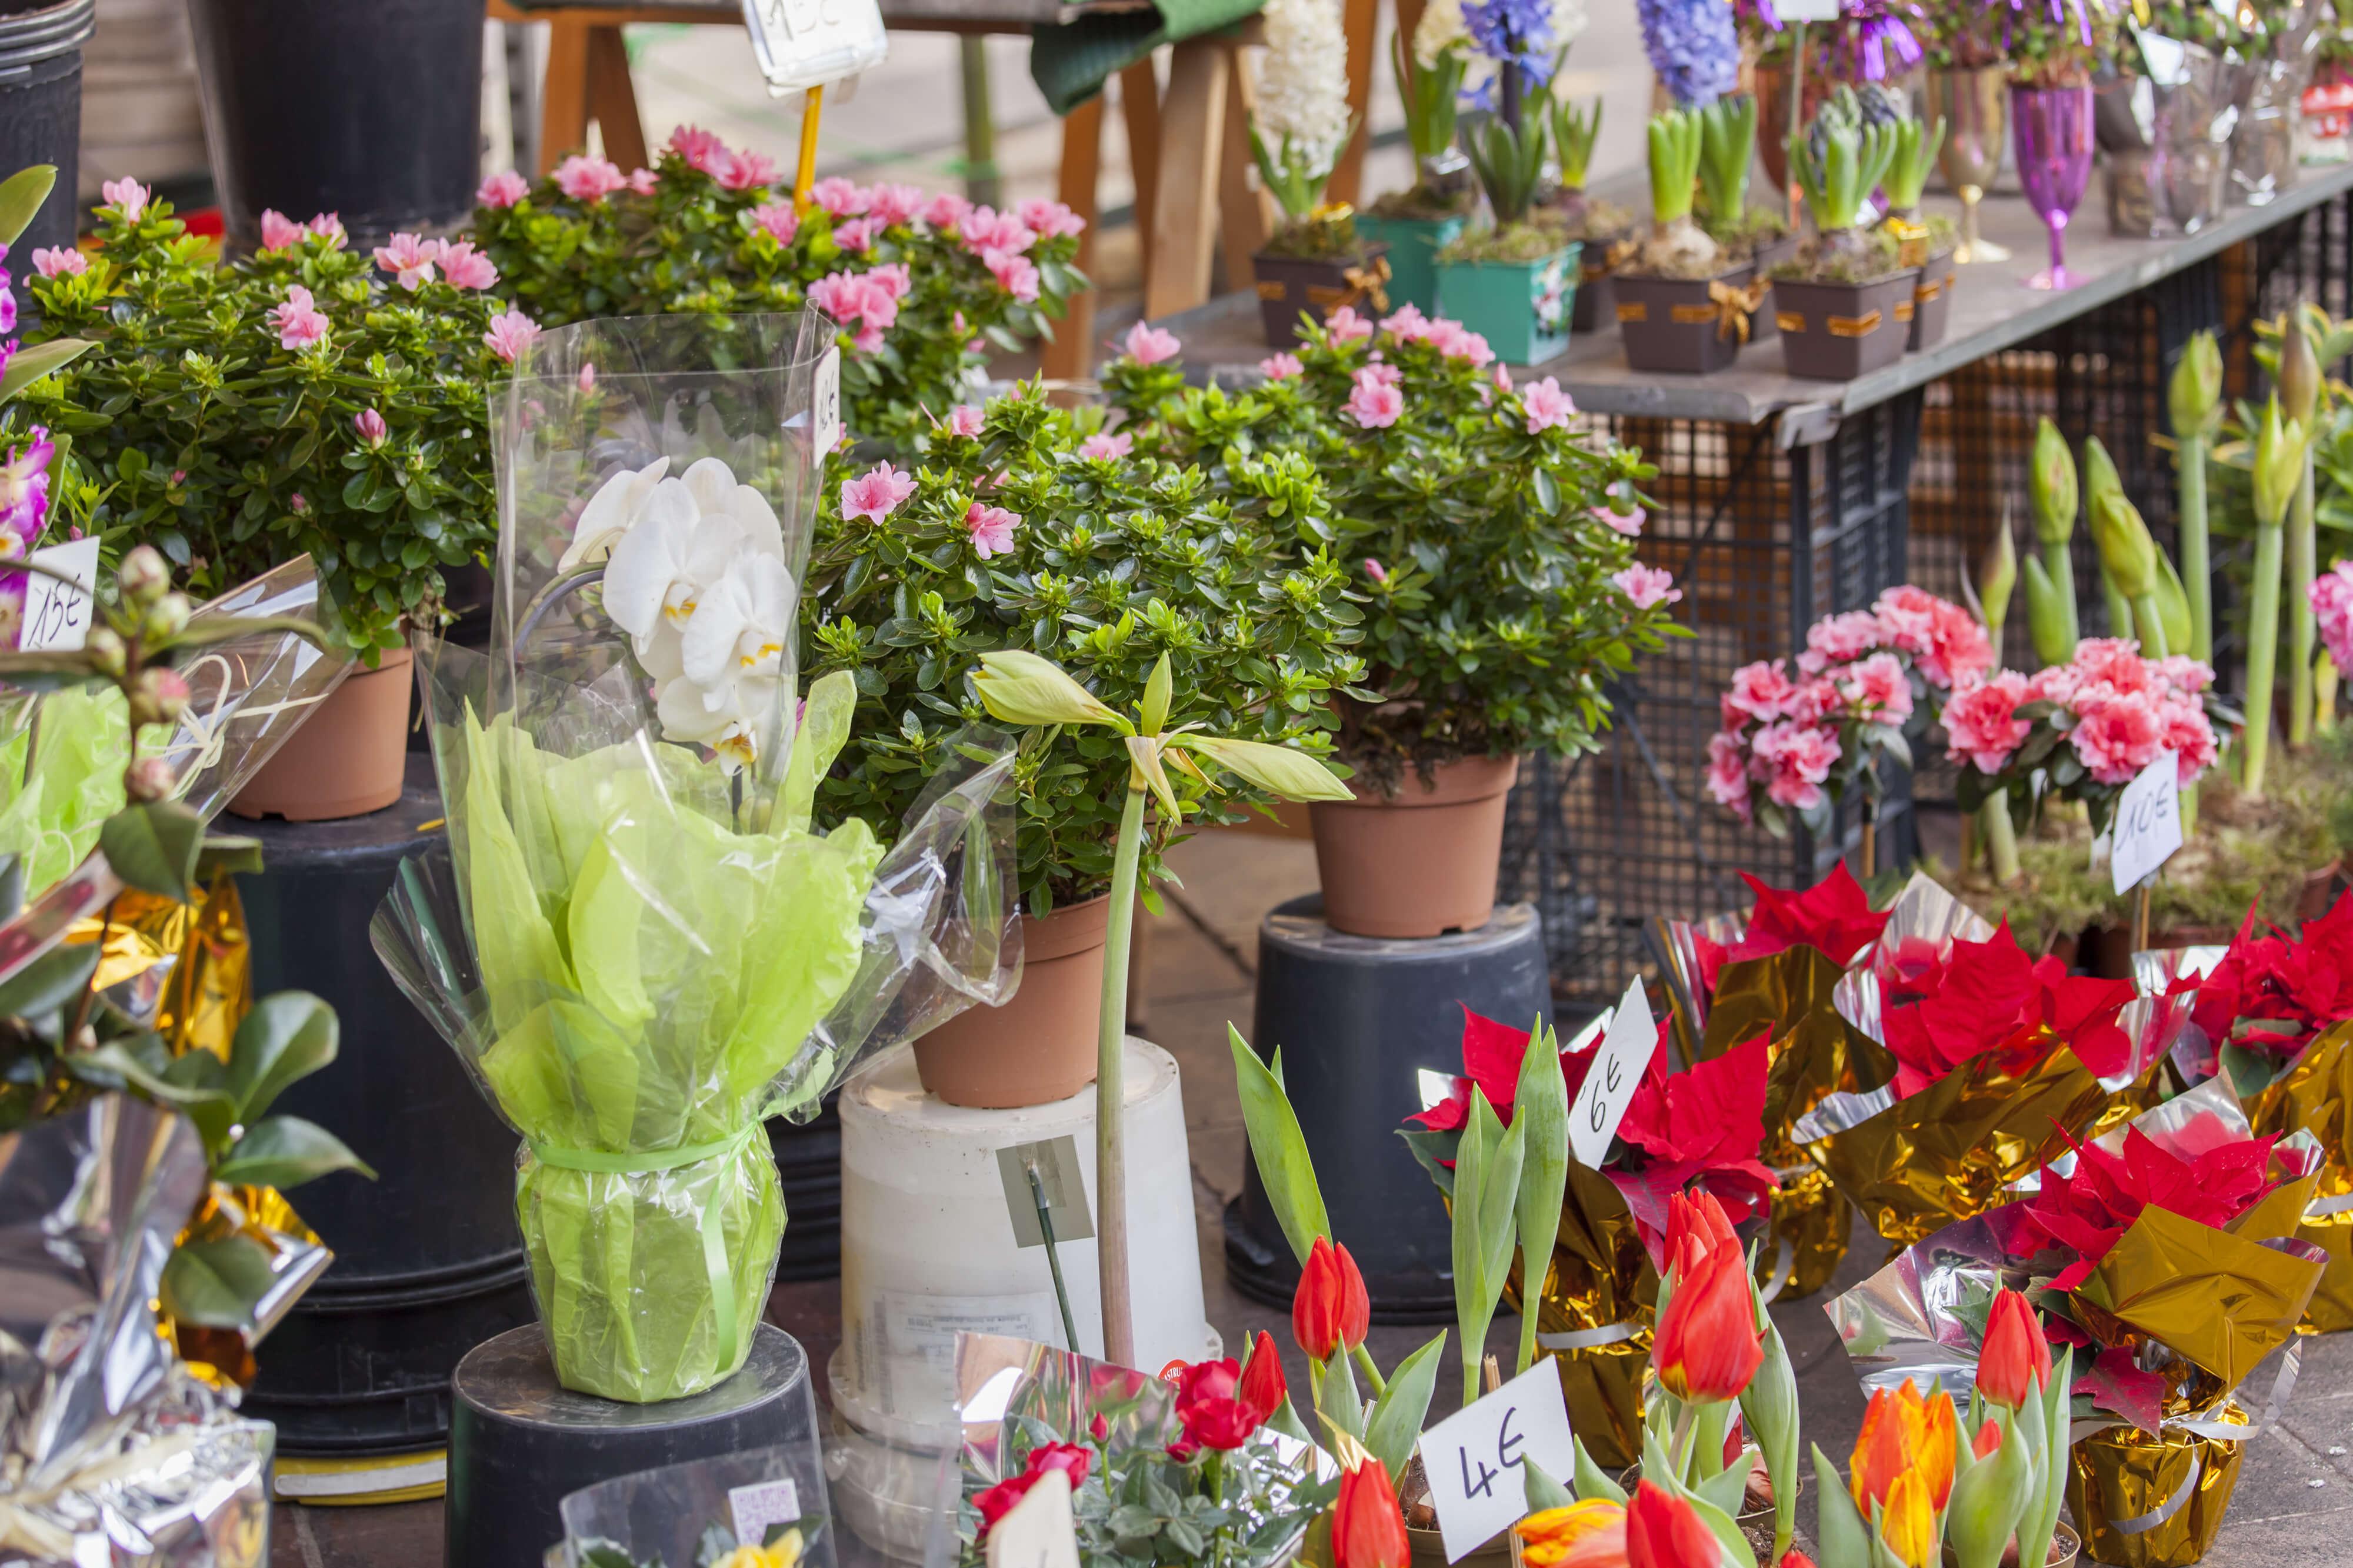 Cours Saleya Flower Market image